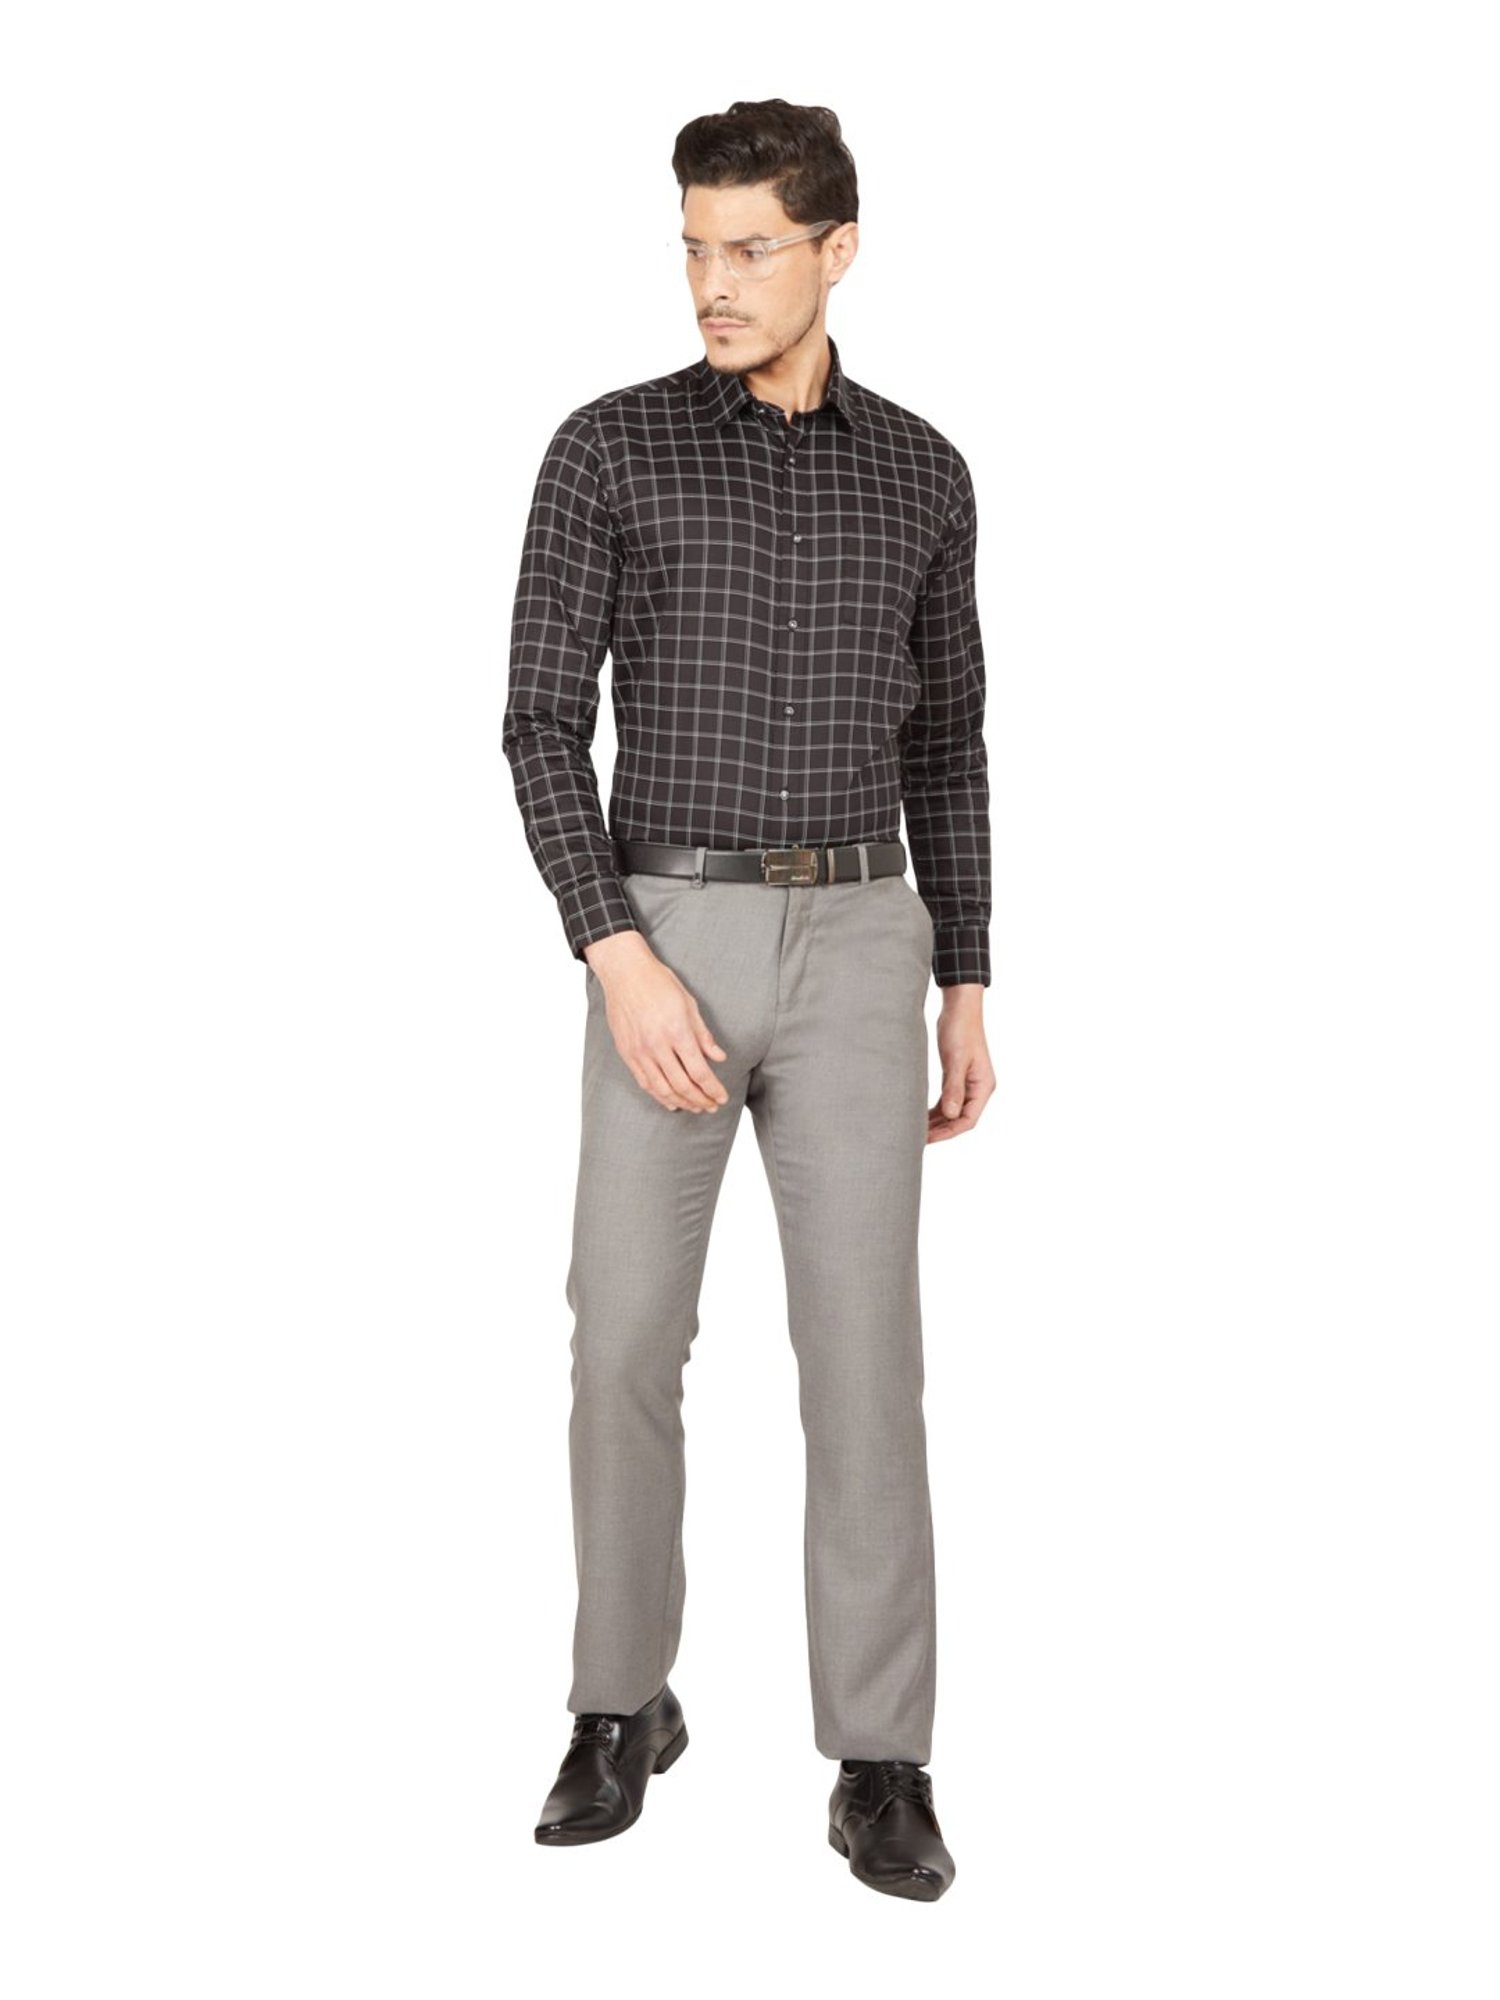 Buy Grey Trousers  Pants for Men by OXEMBERG Online  Ajiocom